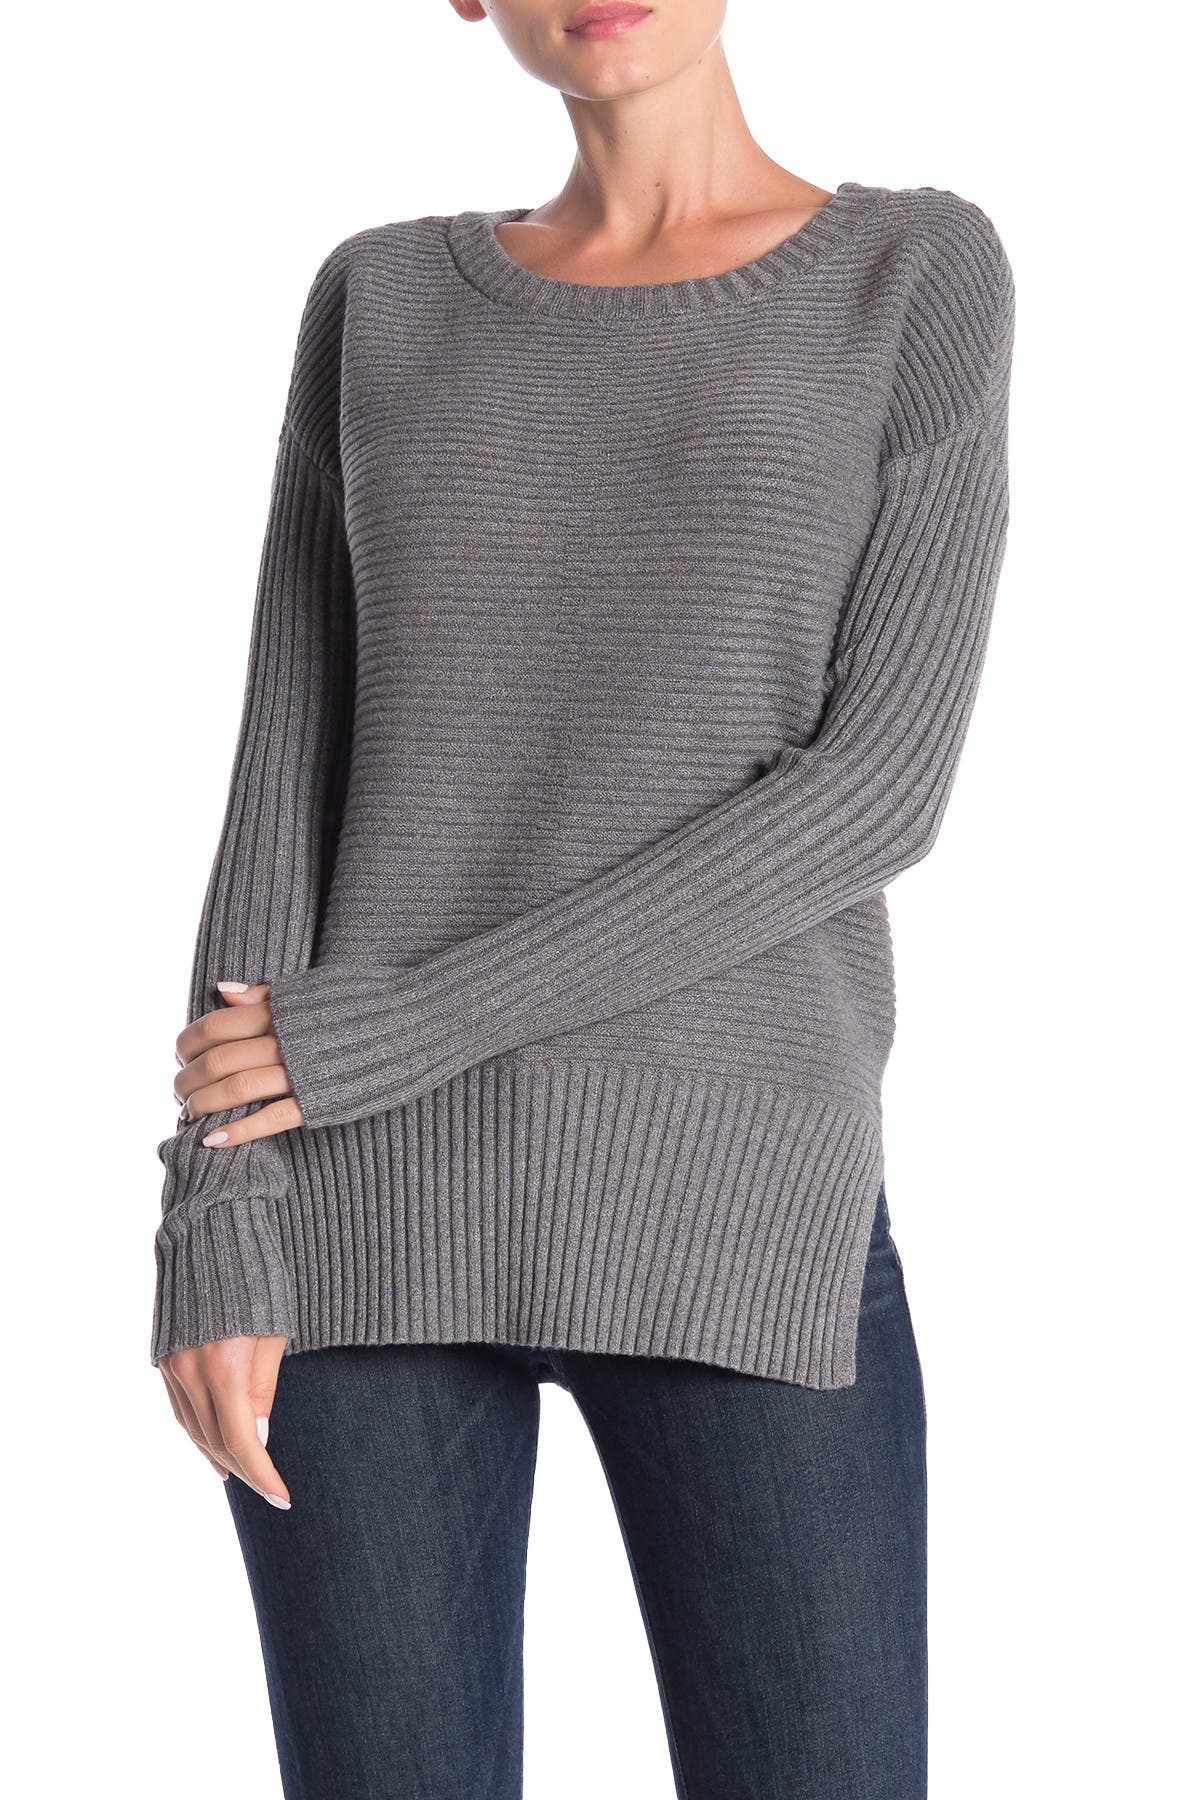 Cyrus | Rib Knit Pullover Sweater 